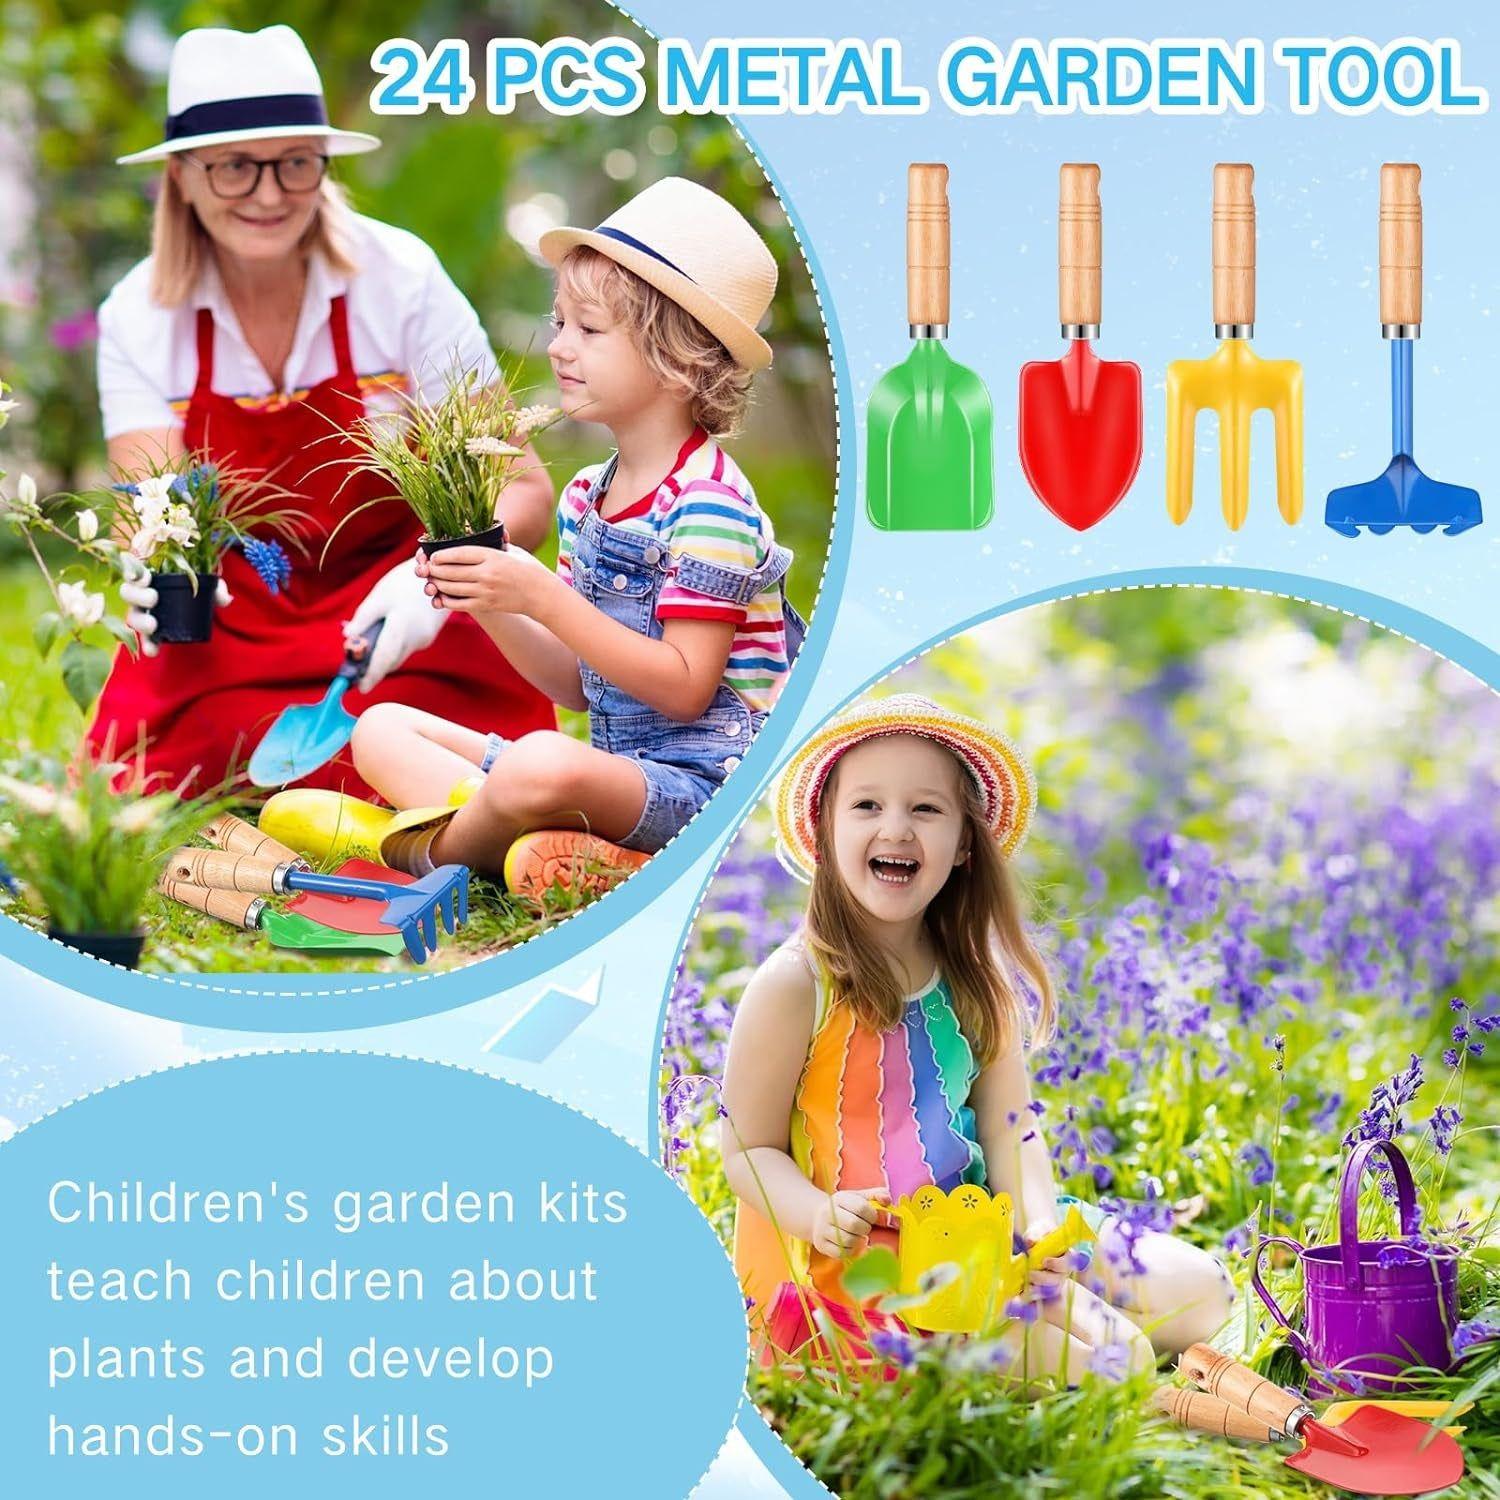 24 Pcs Kids Gardening Tools Metal Garden Tools Including Shovel, Rake, Fork and Trowel, Garden Beach Sand Tools with Wooden Handle Hoe for Children Gift Outdoor Beach Gardening